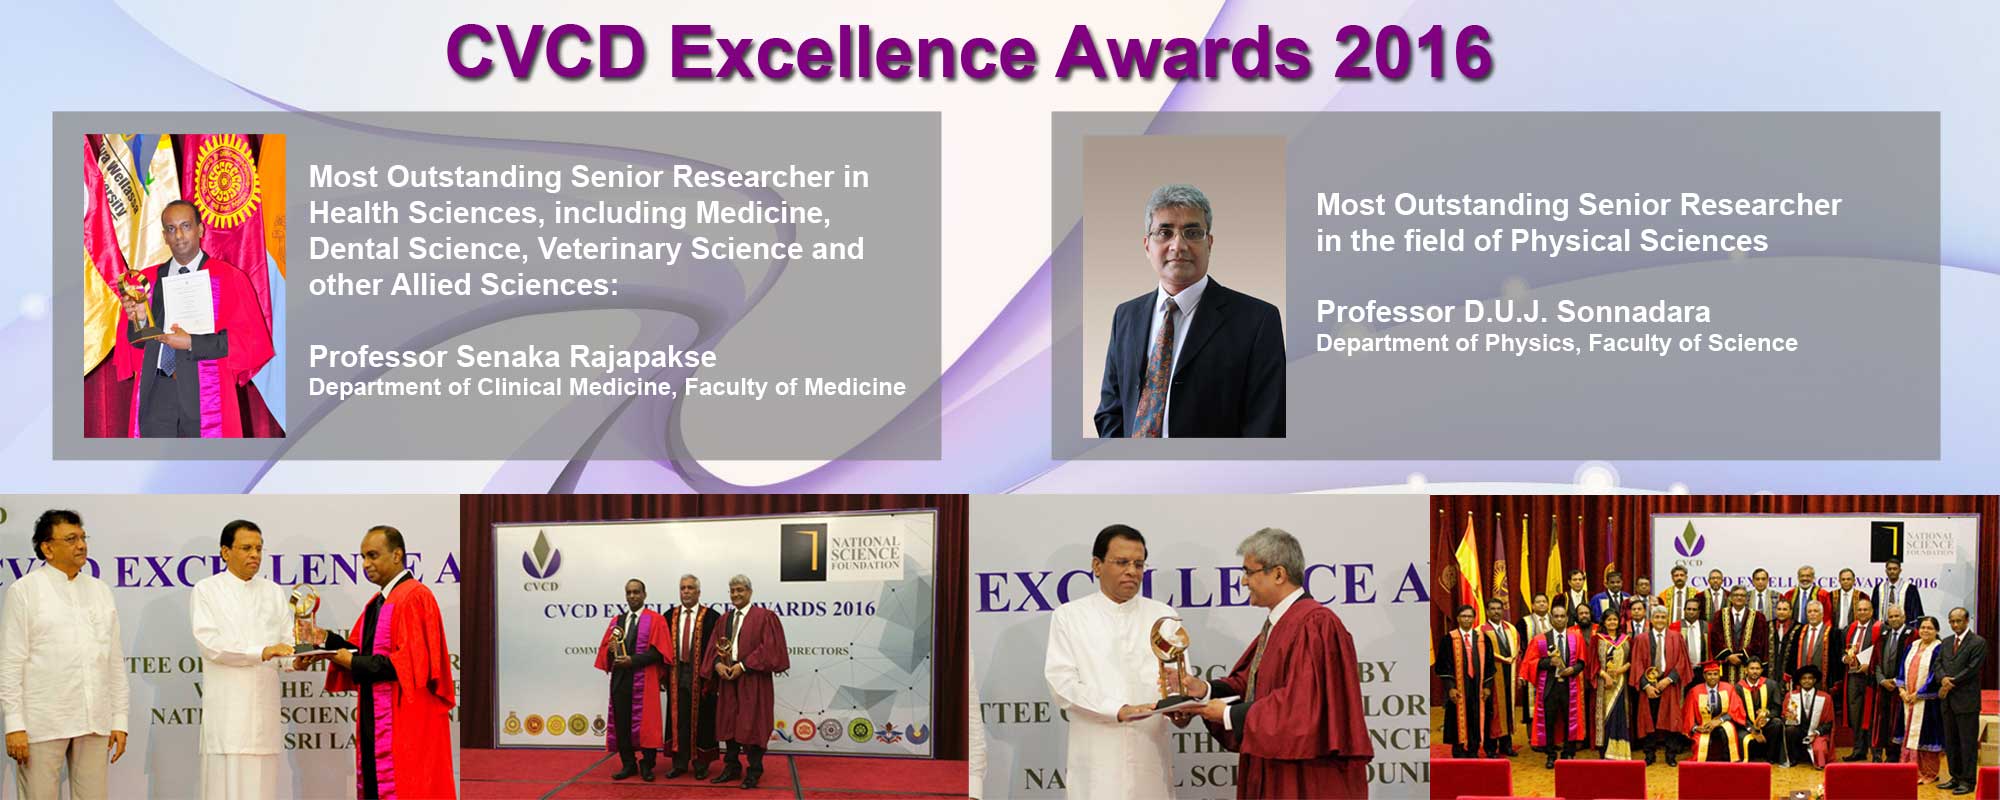 CVCD Excellence Awards 2016